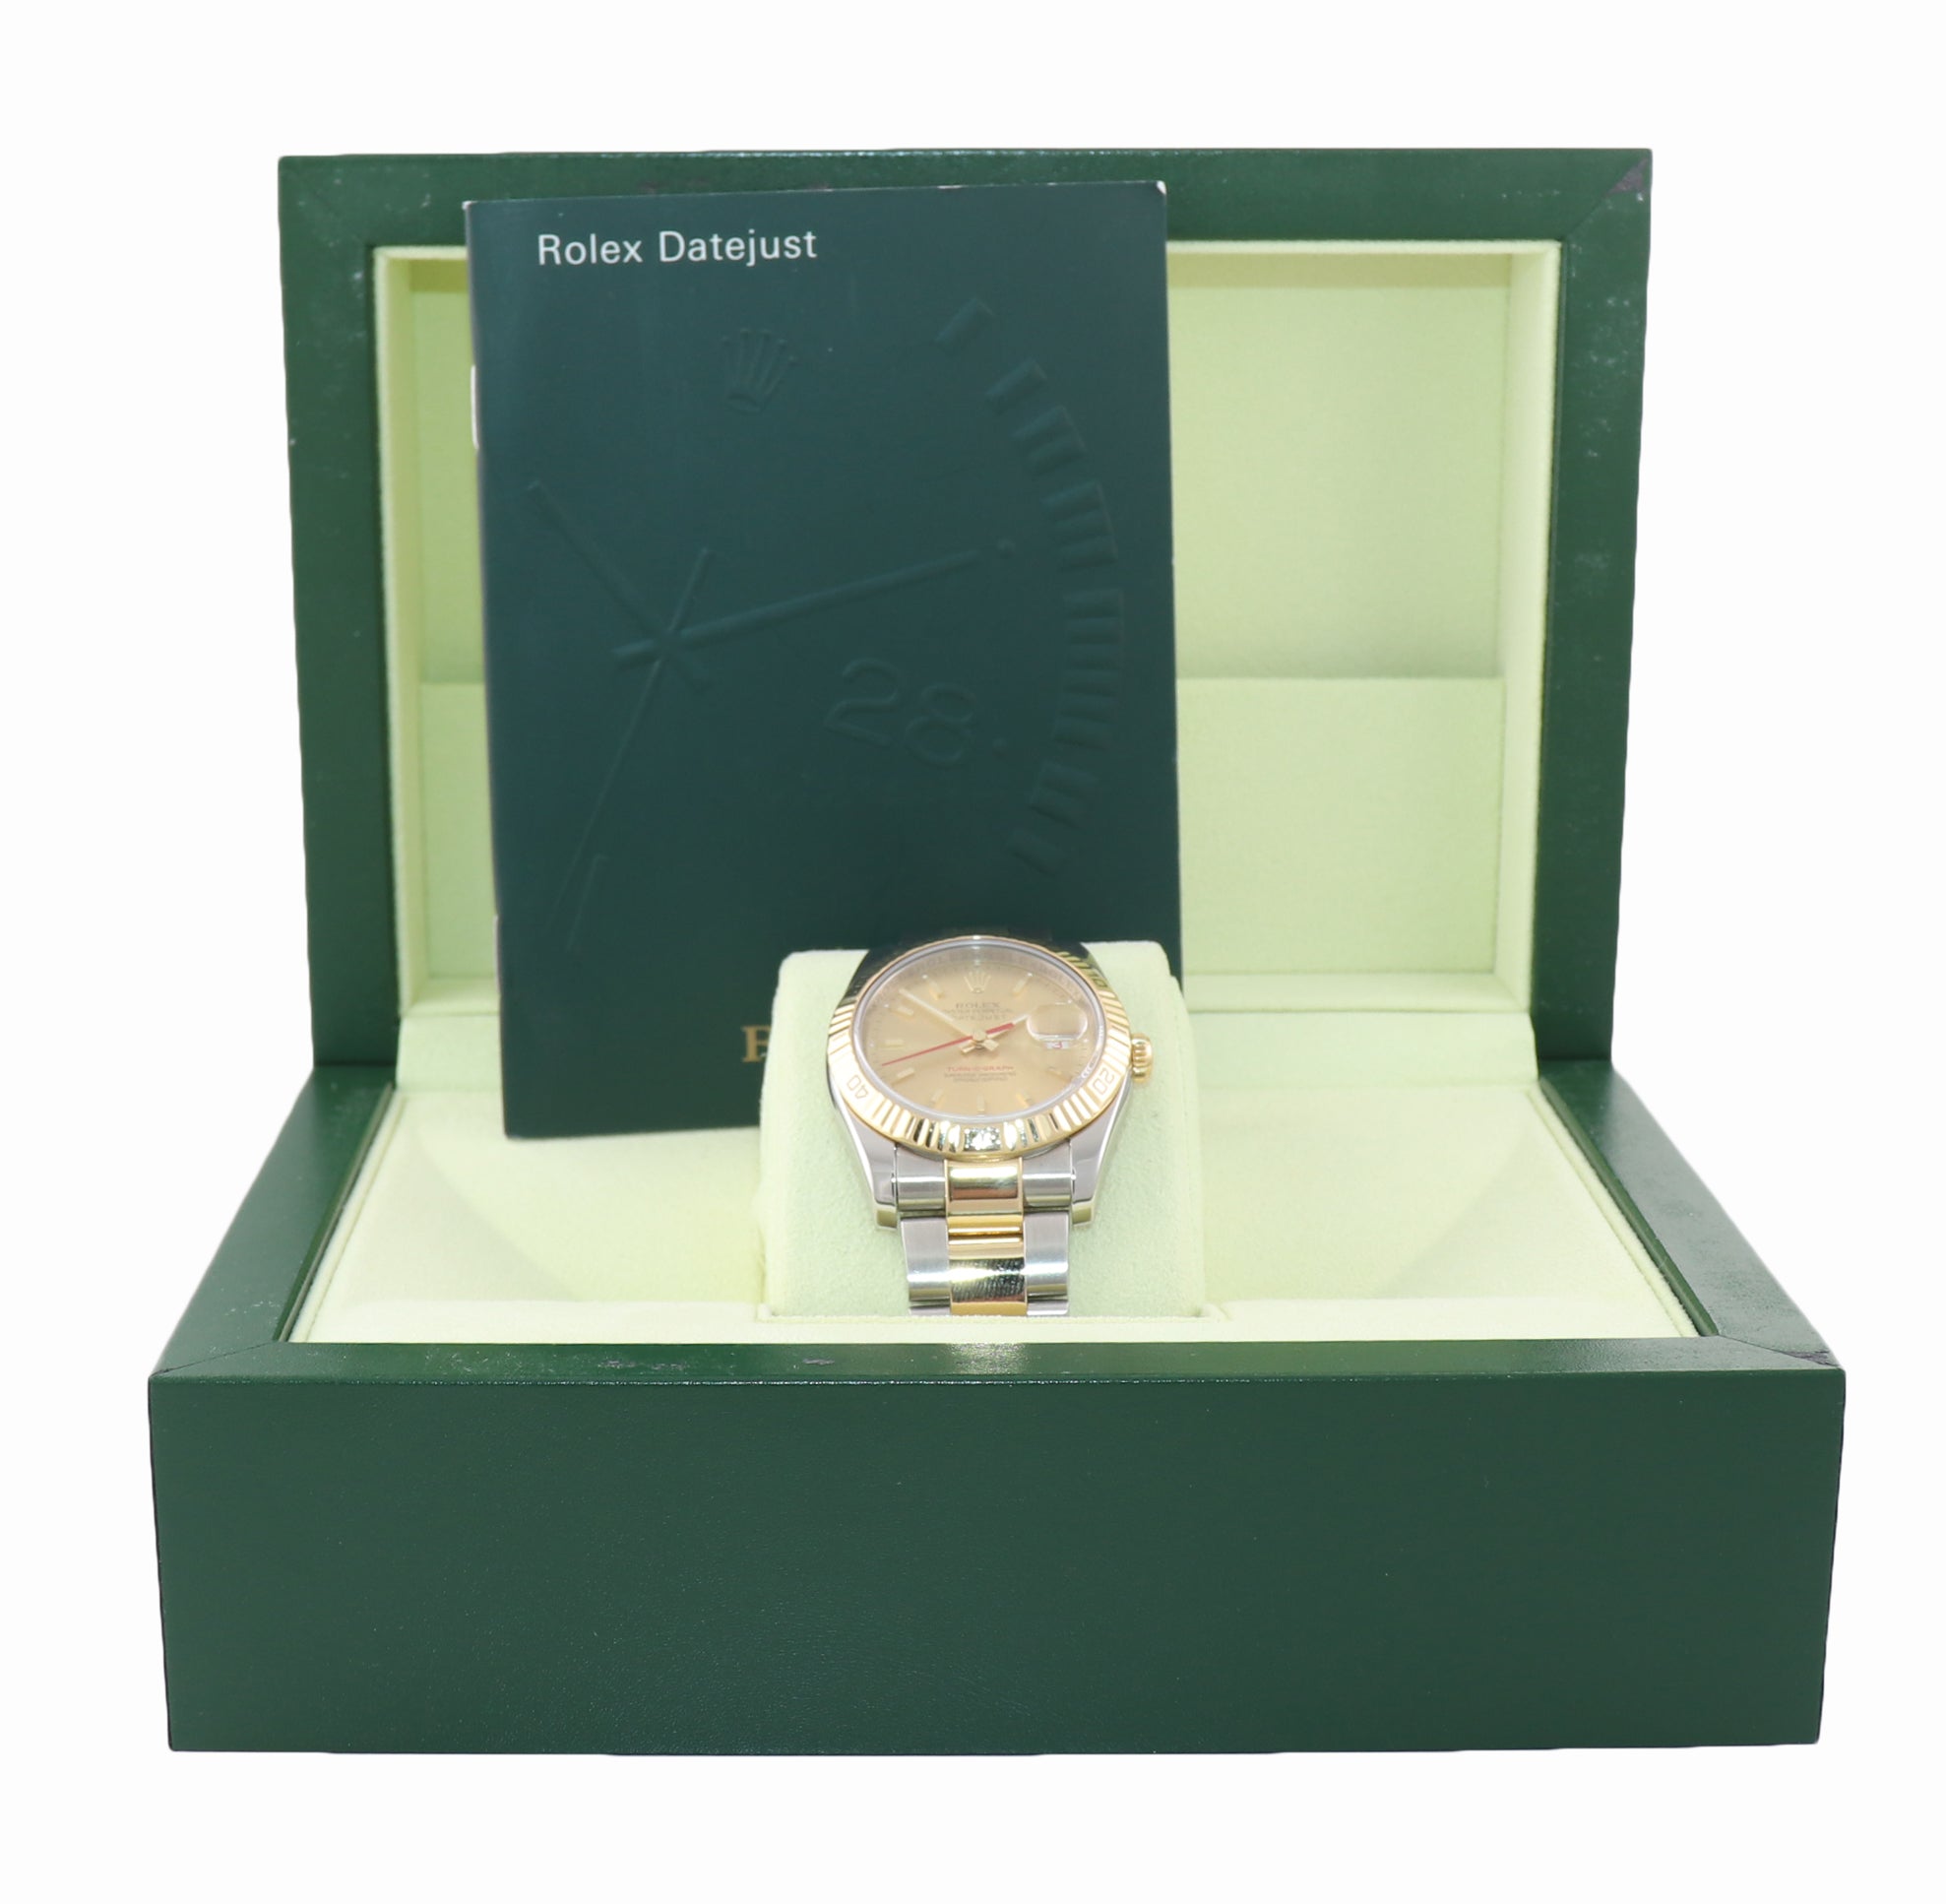 MINT Rolex DateJust 116263 Turn-O-Graph 36mm Thunderbird Champagne Watch Box